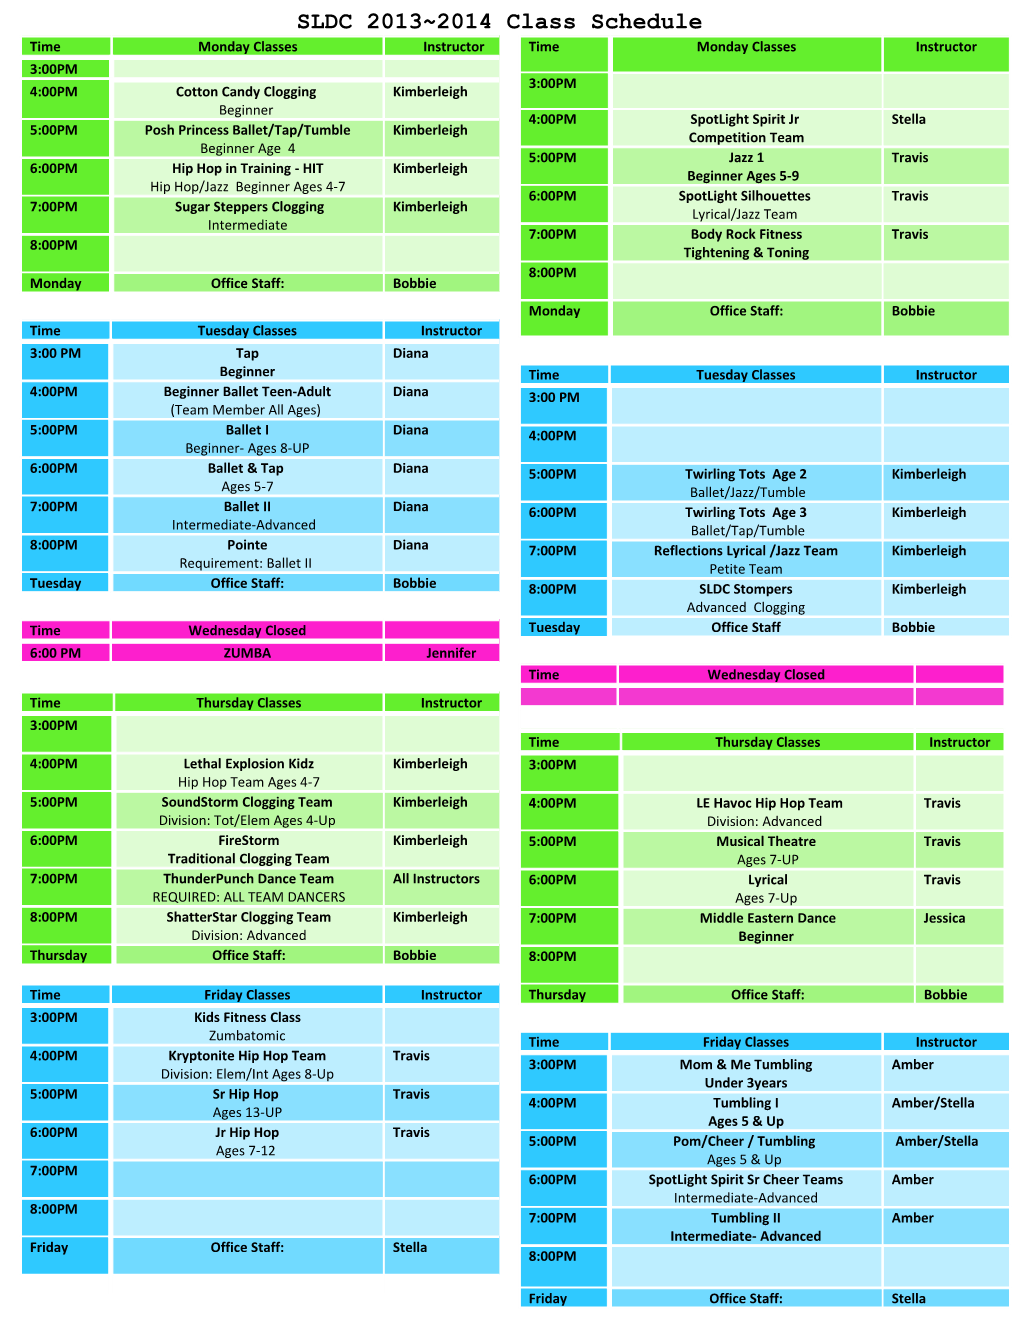 SLDC 2013 2014 Class Schedule